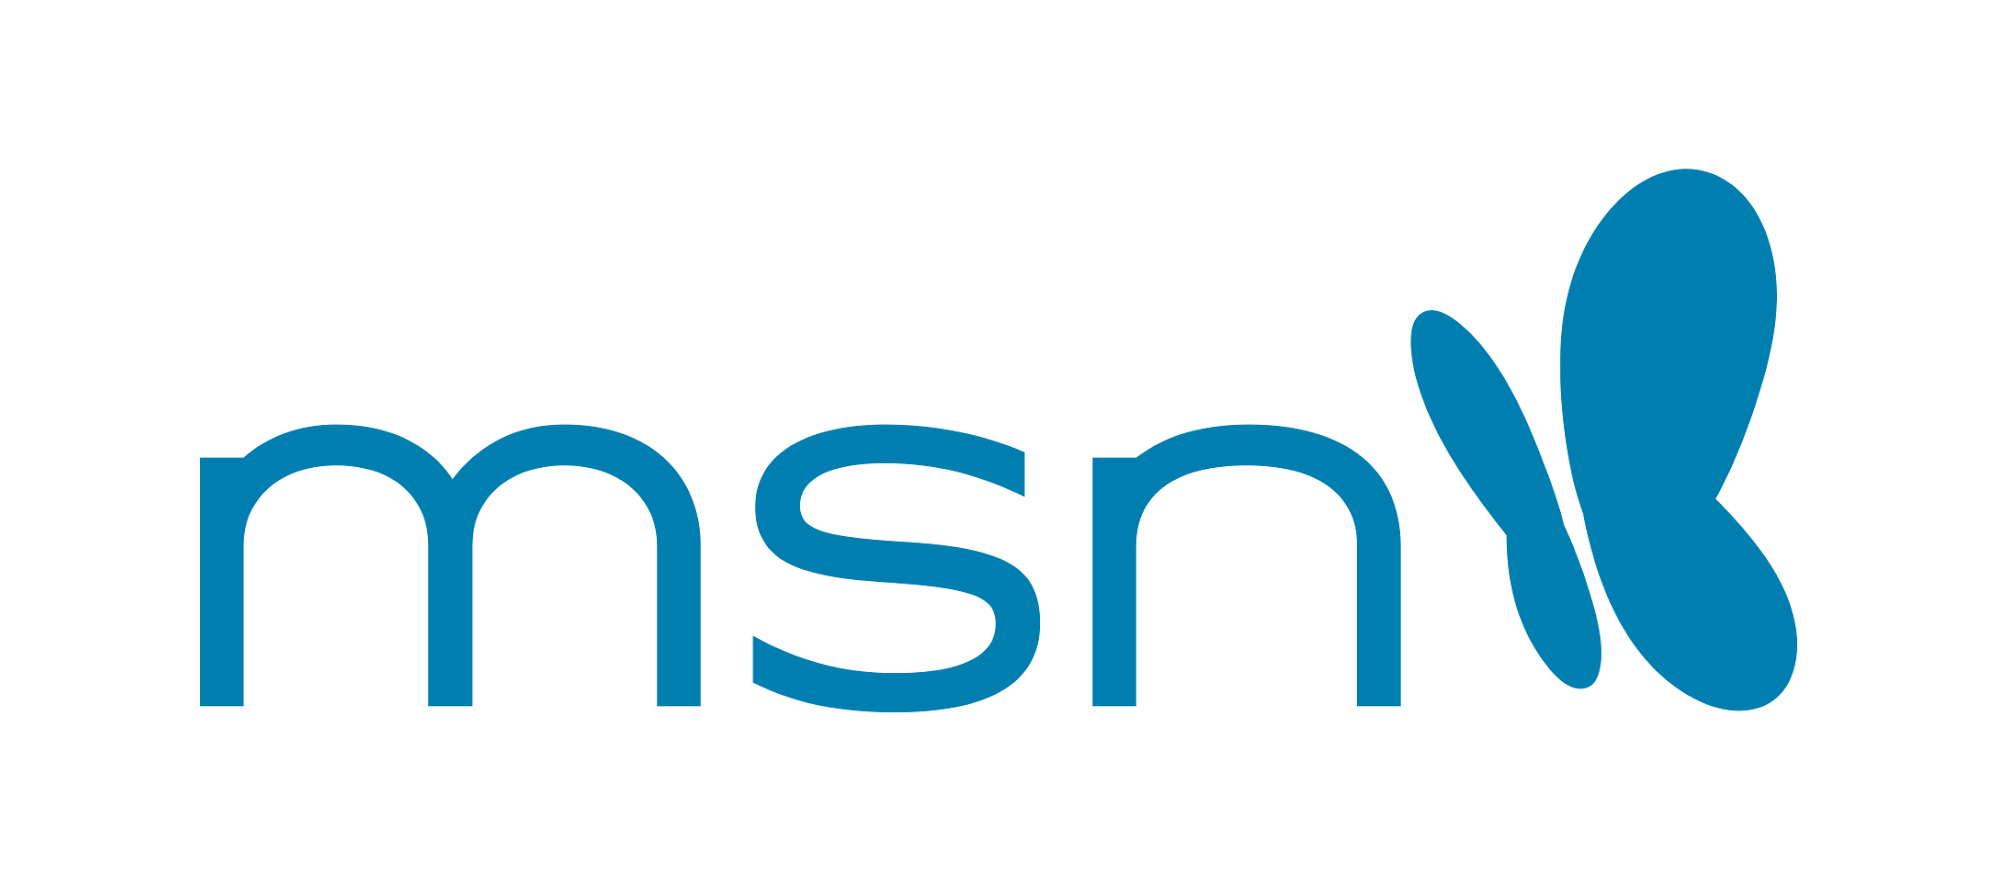 Internet Butterfly Logo - MSN logo | Logok